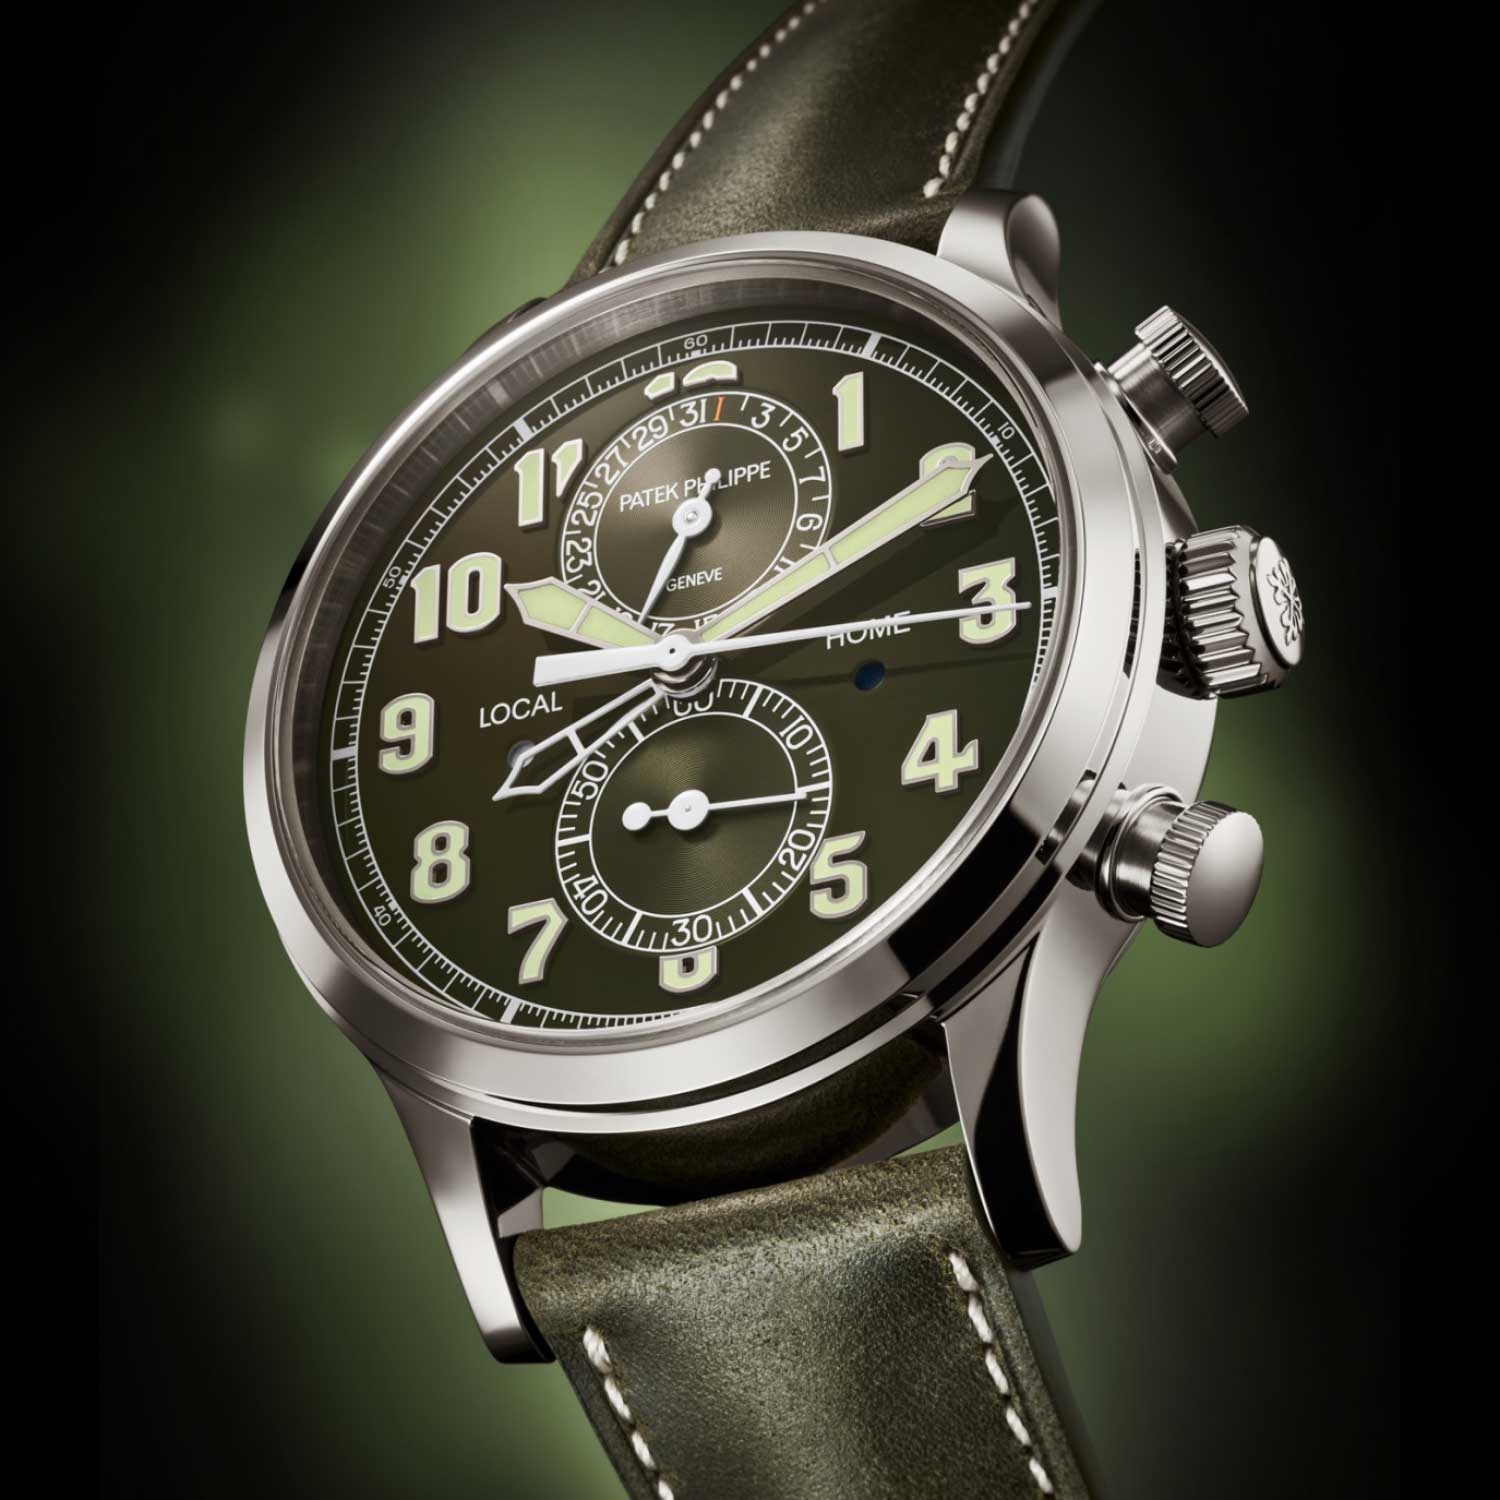 Patek Philippe Calatrava Pilot Travel Time Chronograph Ref. 5924G with khaki green lacquered dial